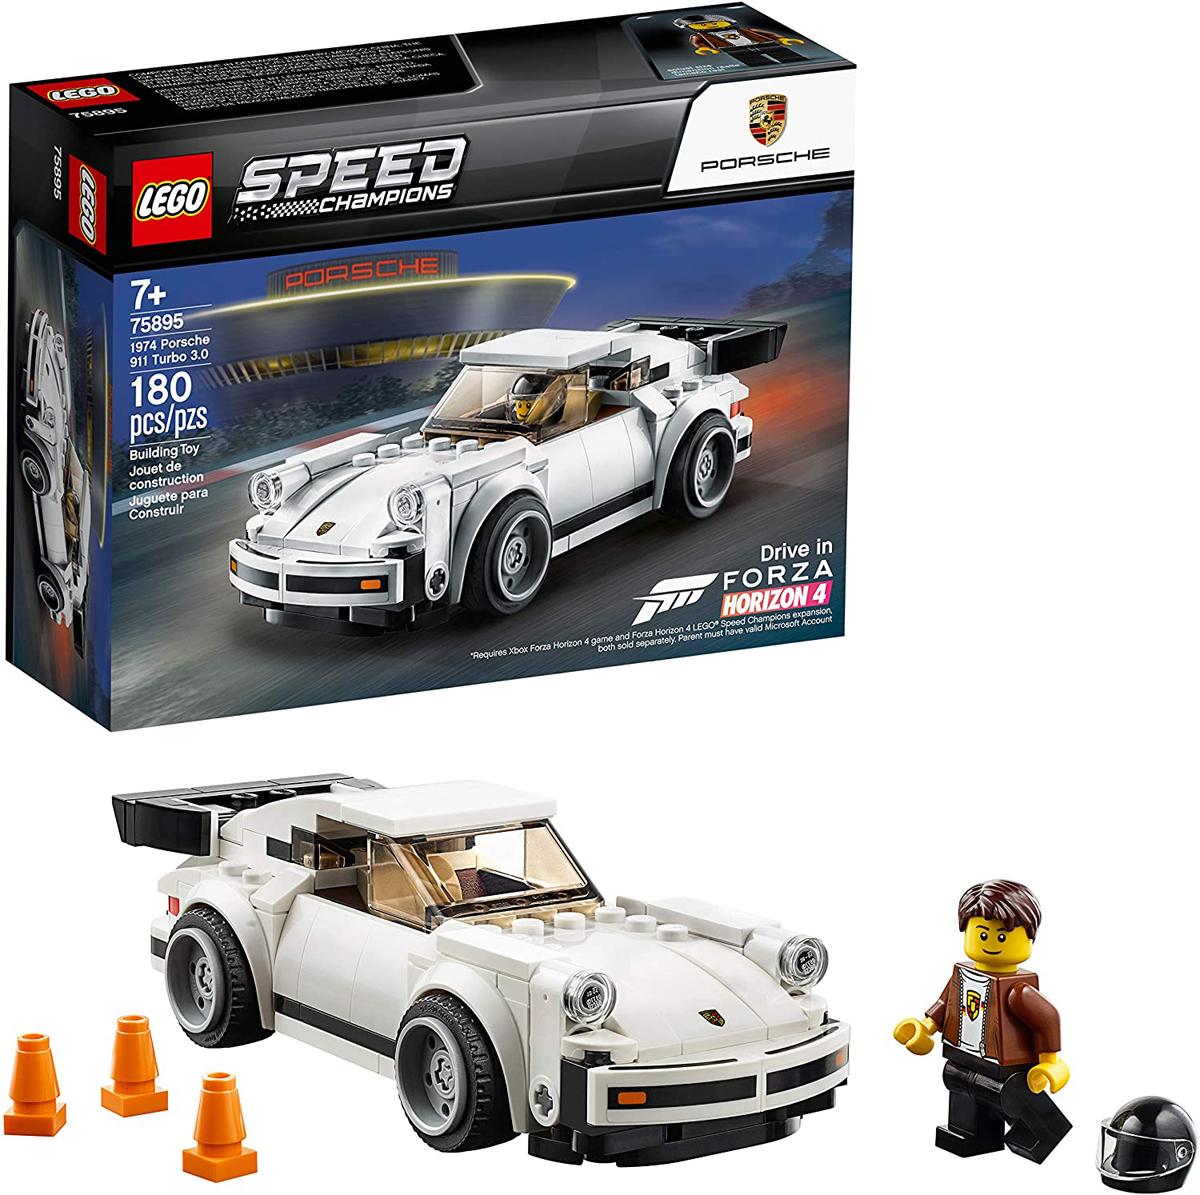 Lego Speed Champions 1974 Porsche 911 Turbo 3.0 Building Kit for $11.99